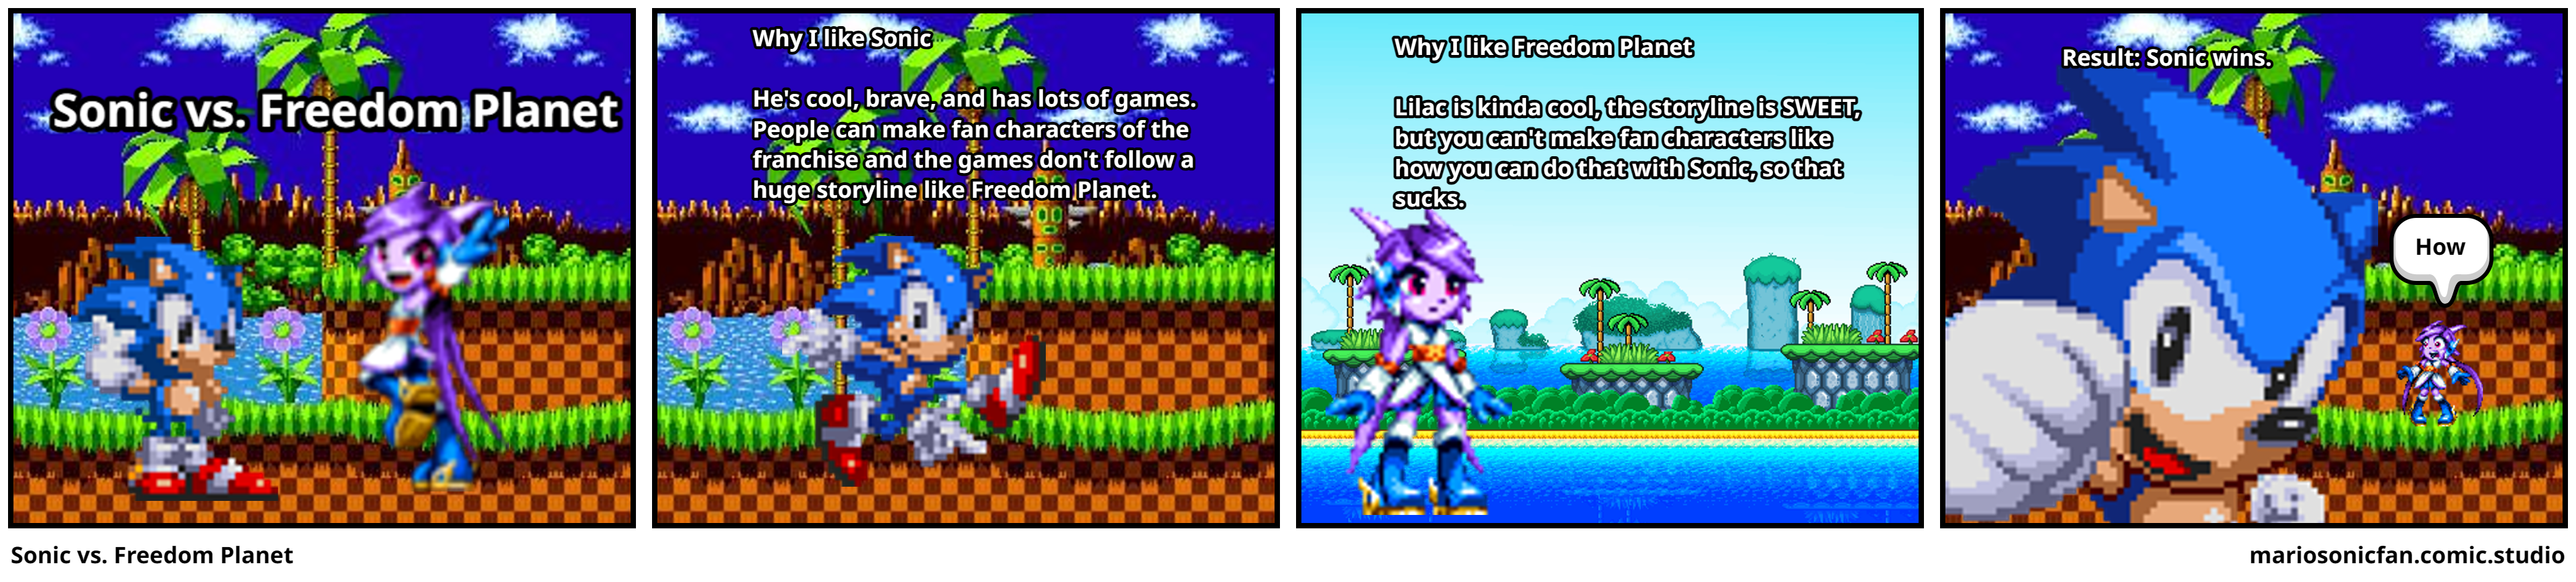 Sonic vs. Freedom Planet